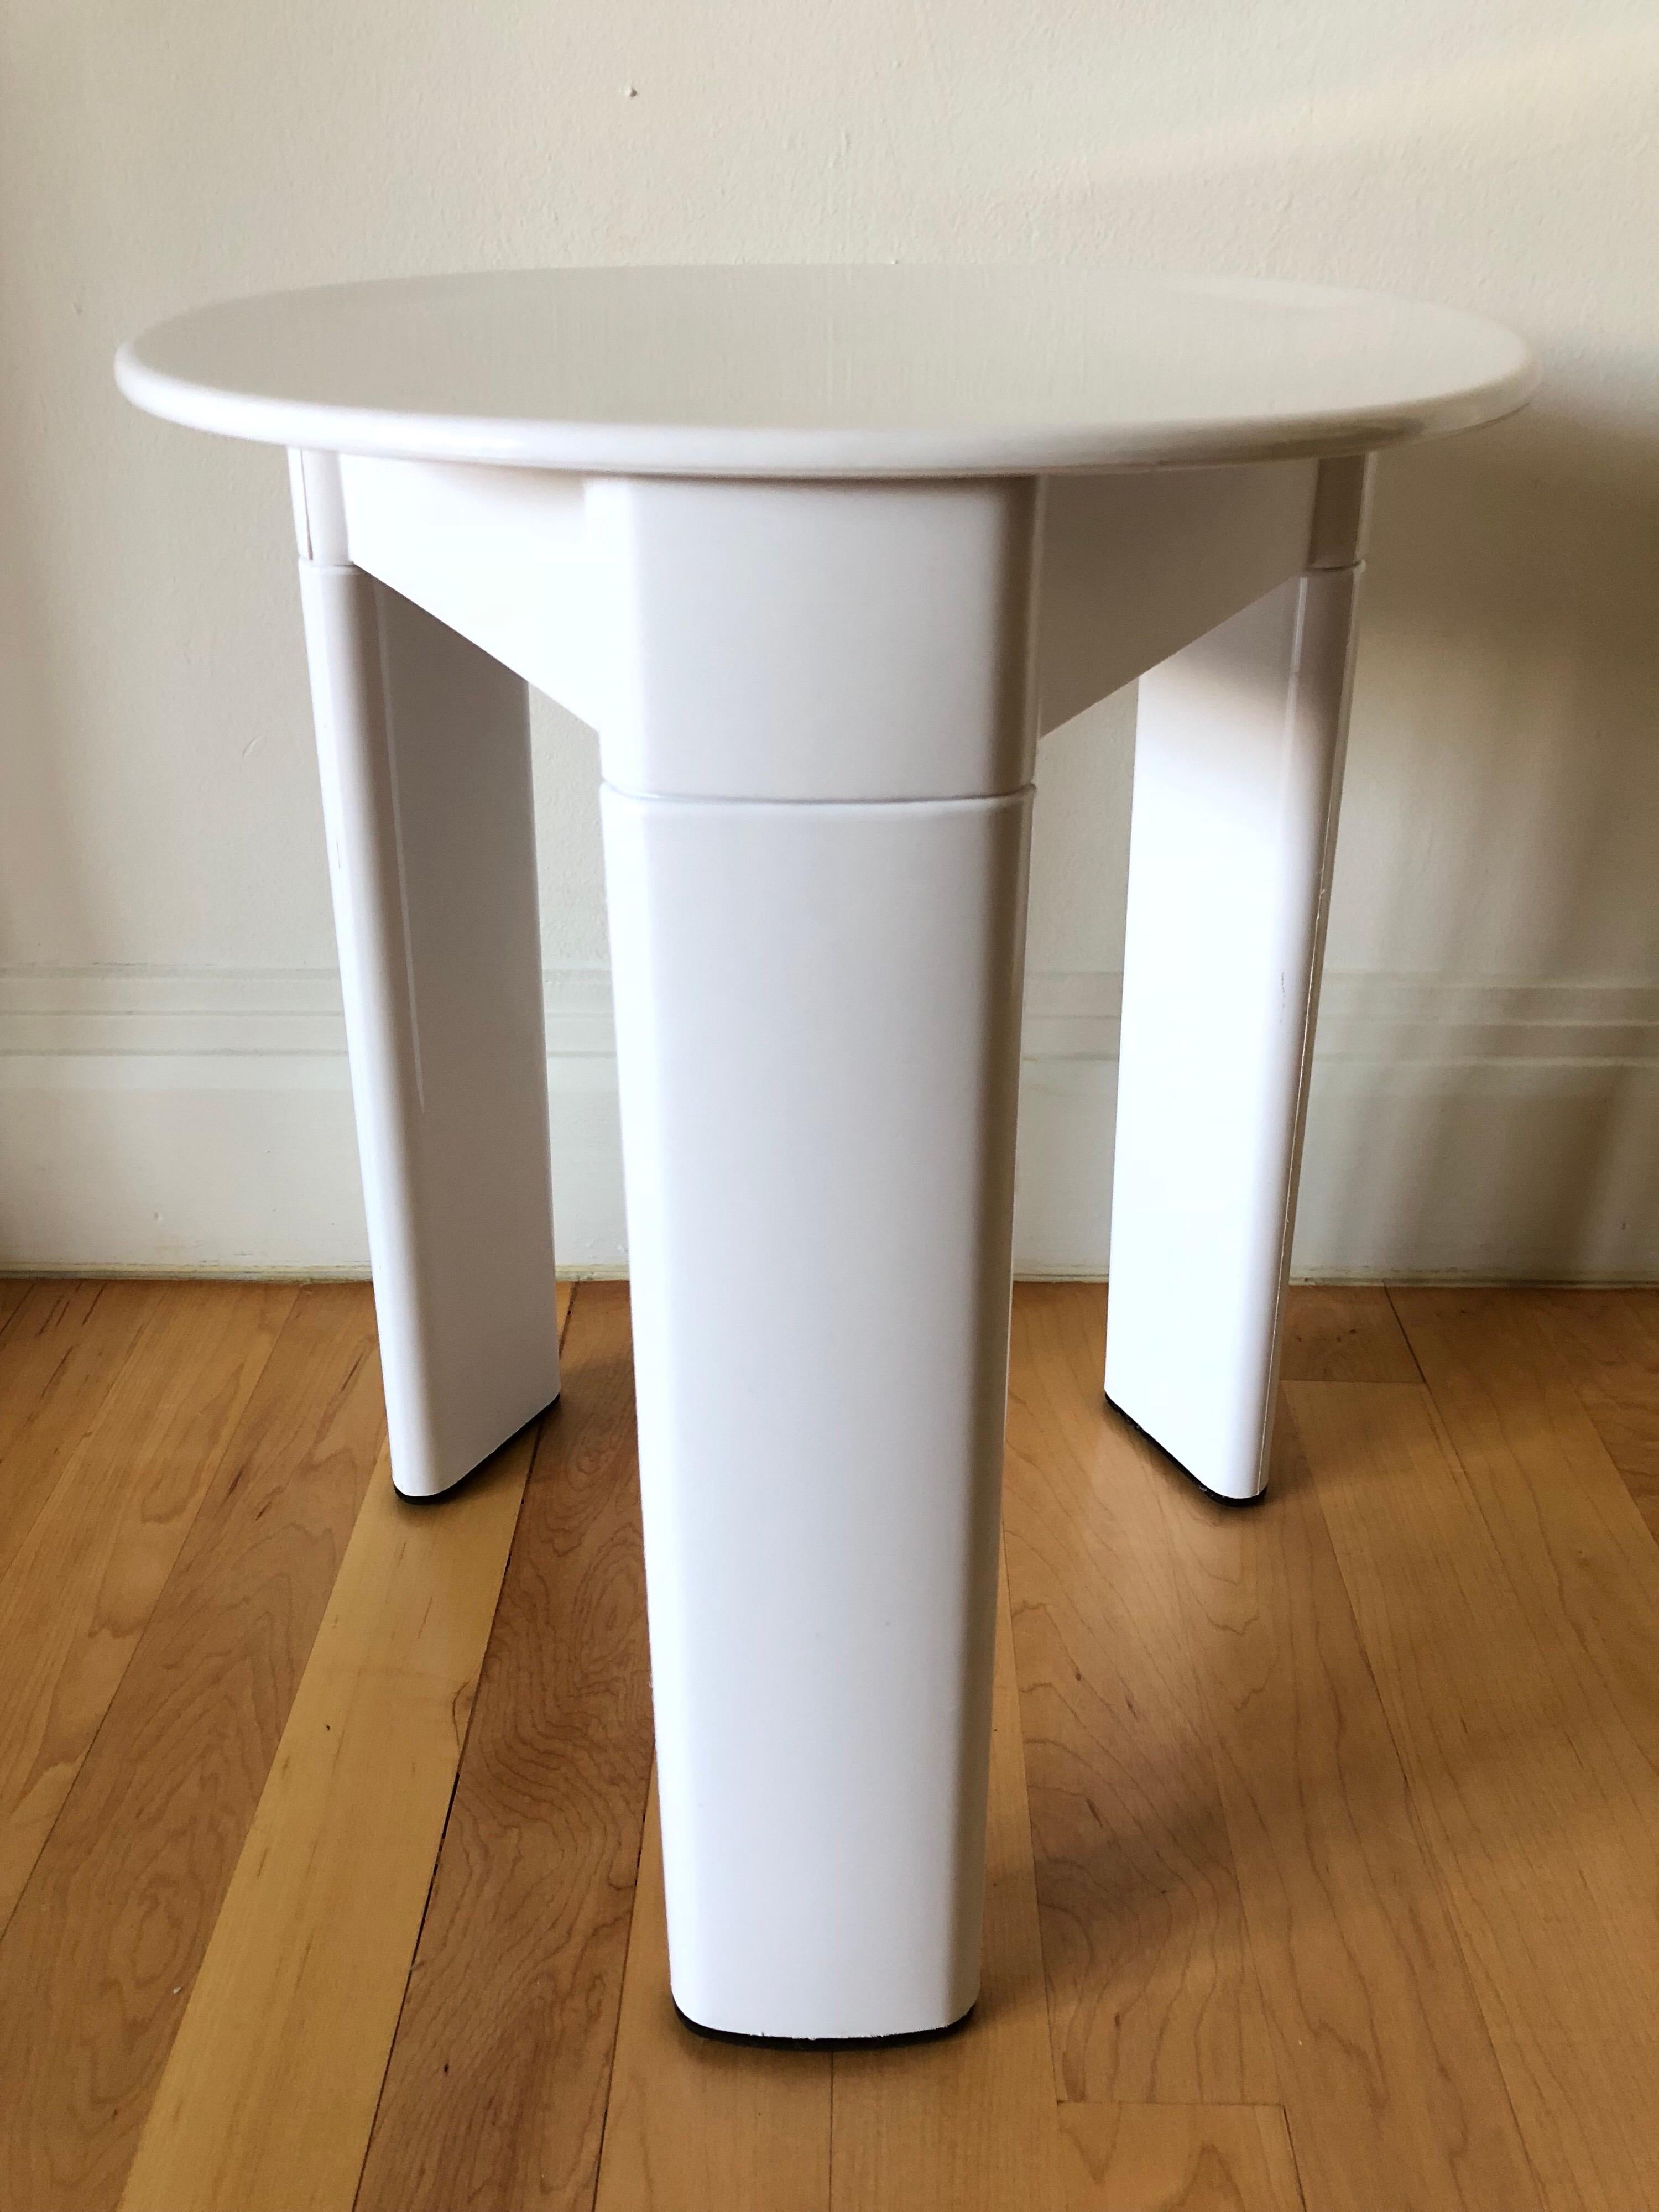 Postmodern table designed by Olaf V. Bohr.